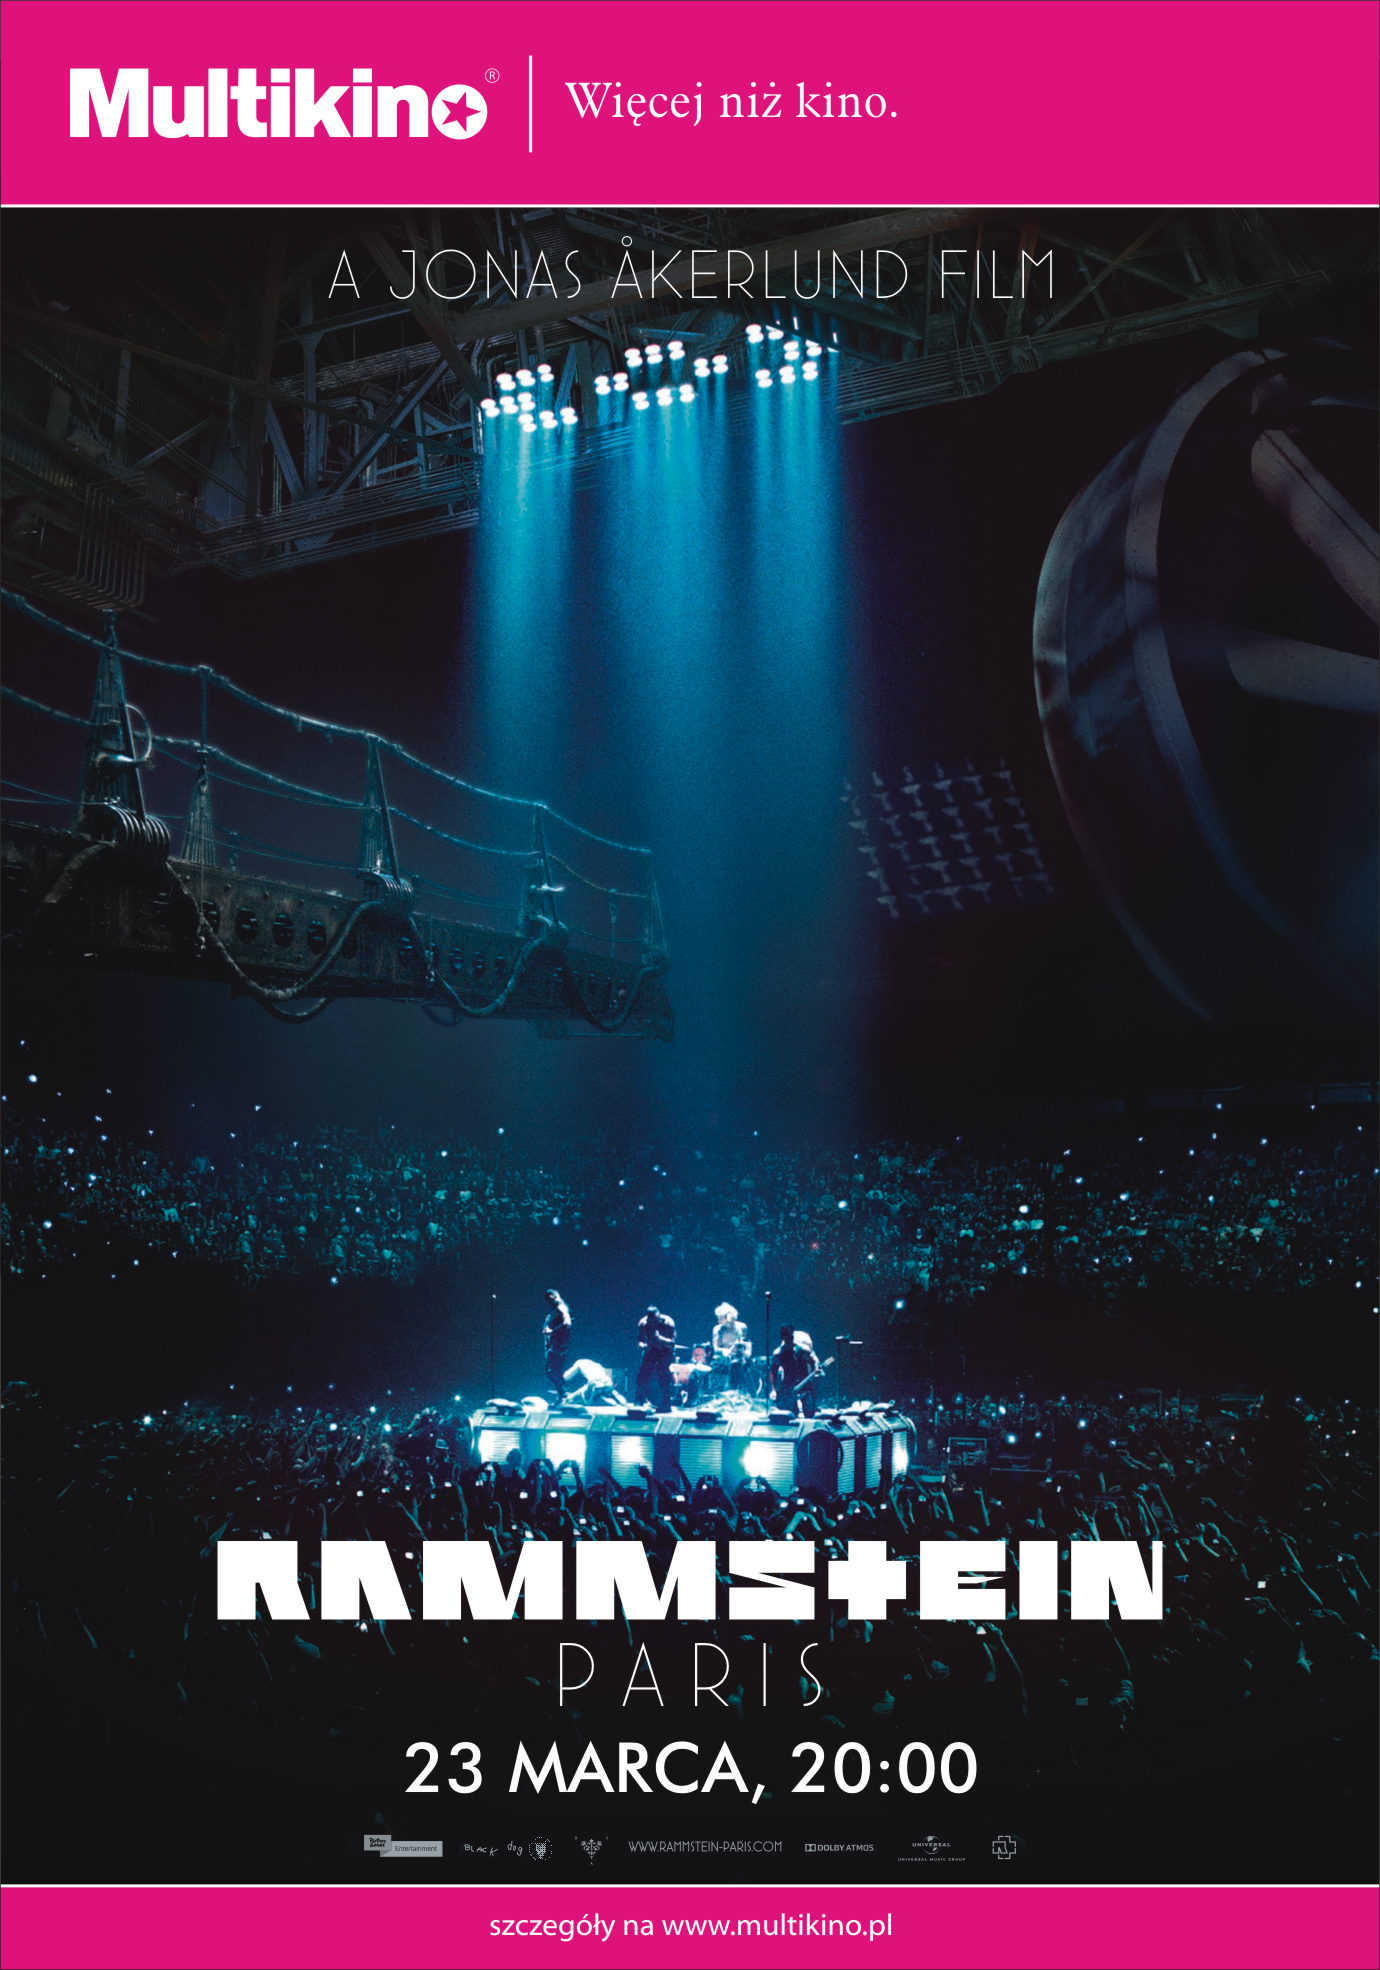 Rammstein Paris 23 marca 2017 w Multikinie!